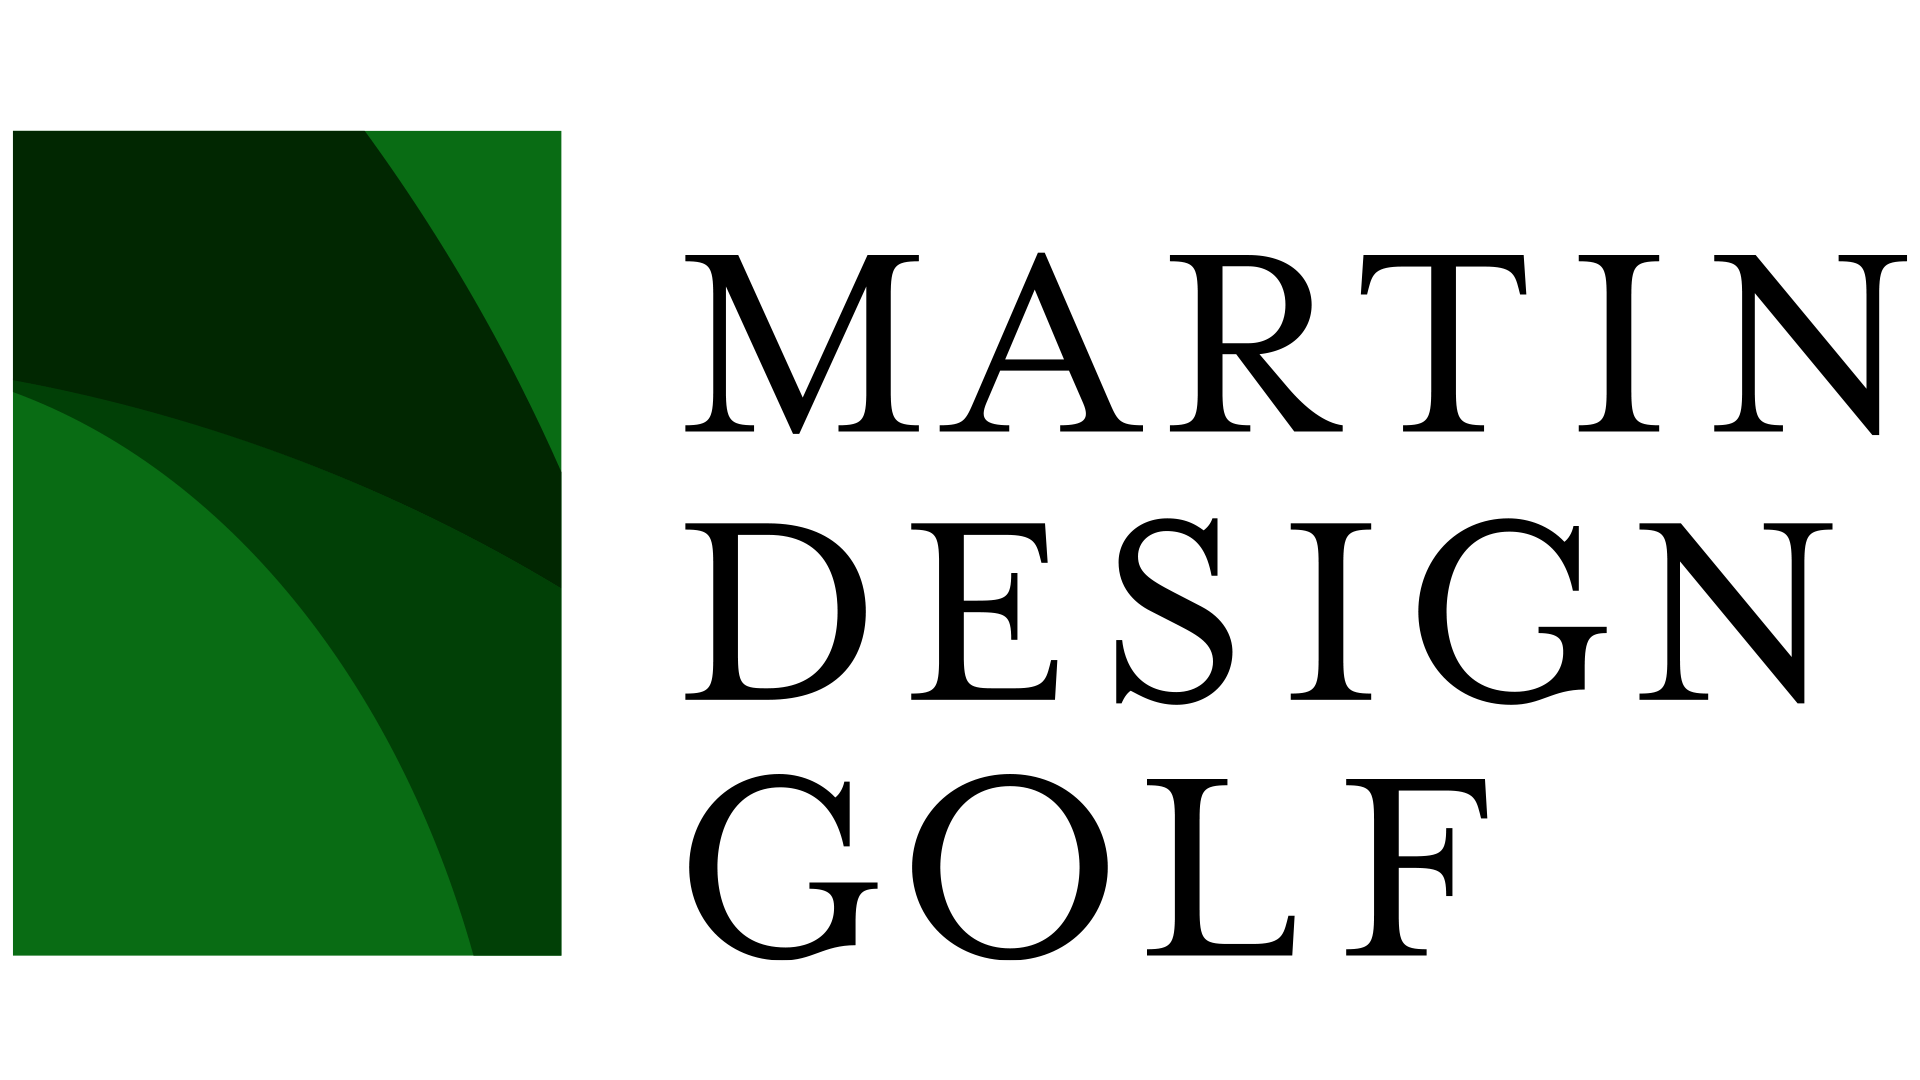 Martin Design Golf logo by faucethead